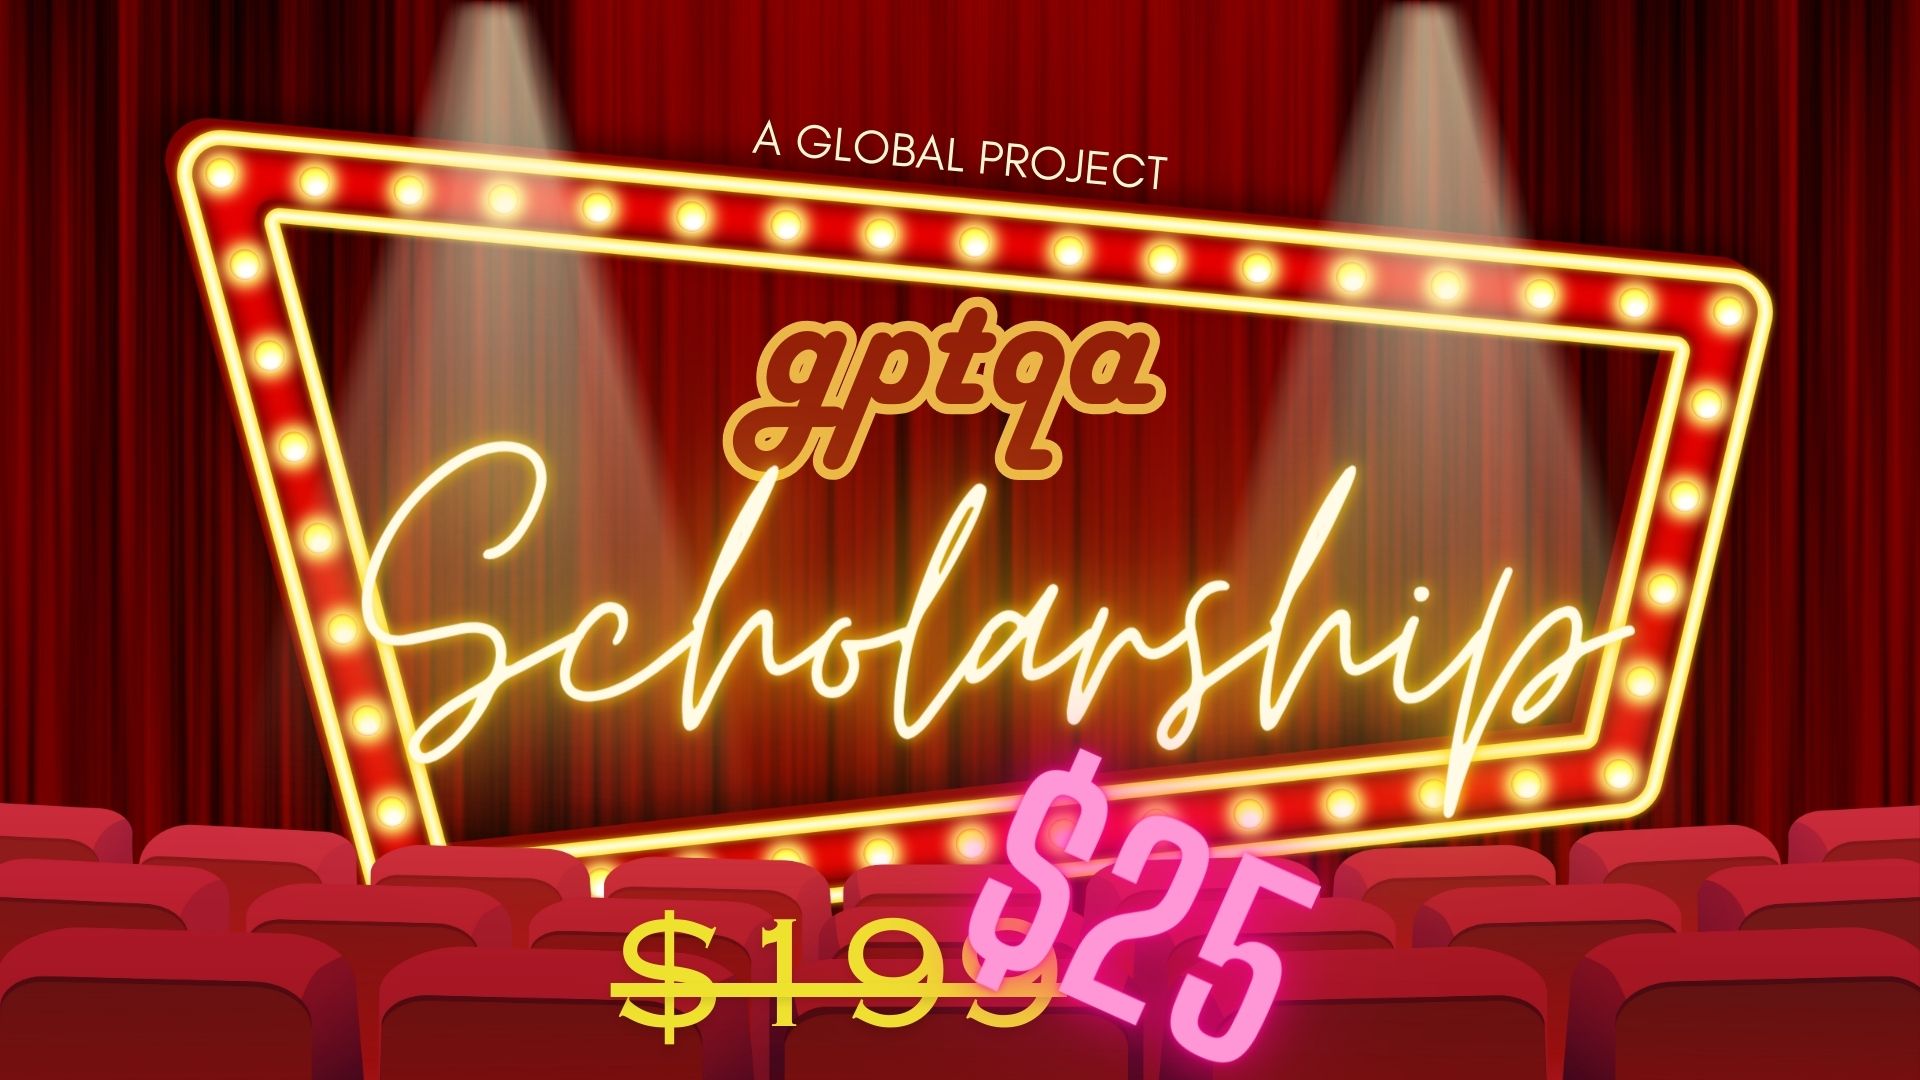 GPTQA Scholarship Project